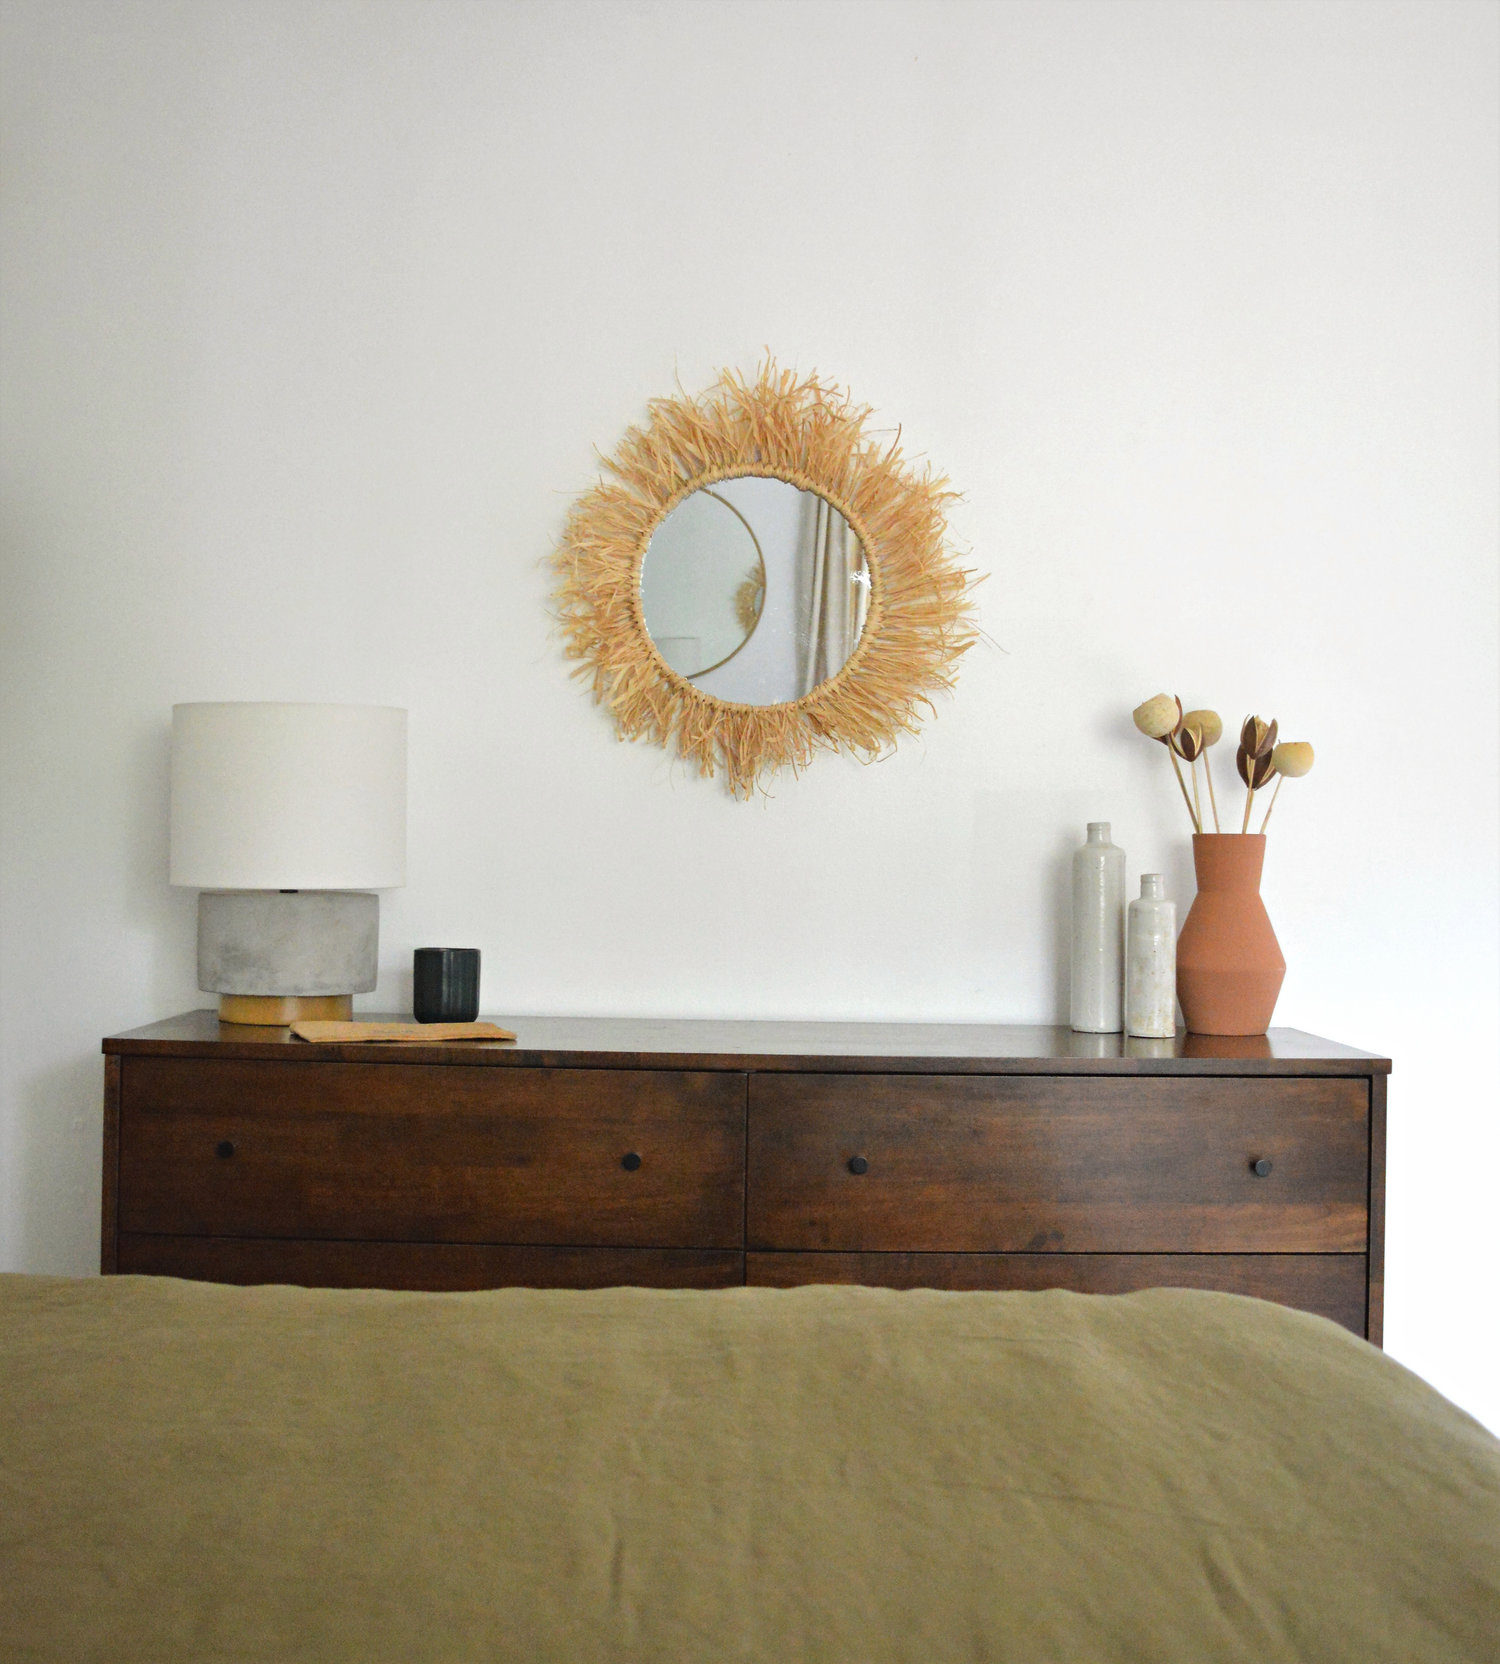 Diy Raffia Mirror Stylemutt Home Your Home Decor Resource For